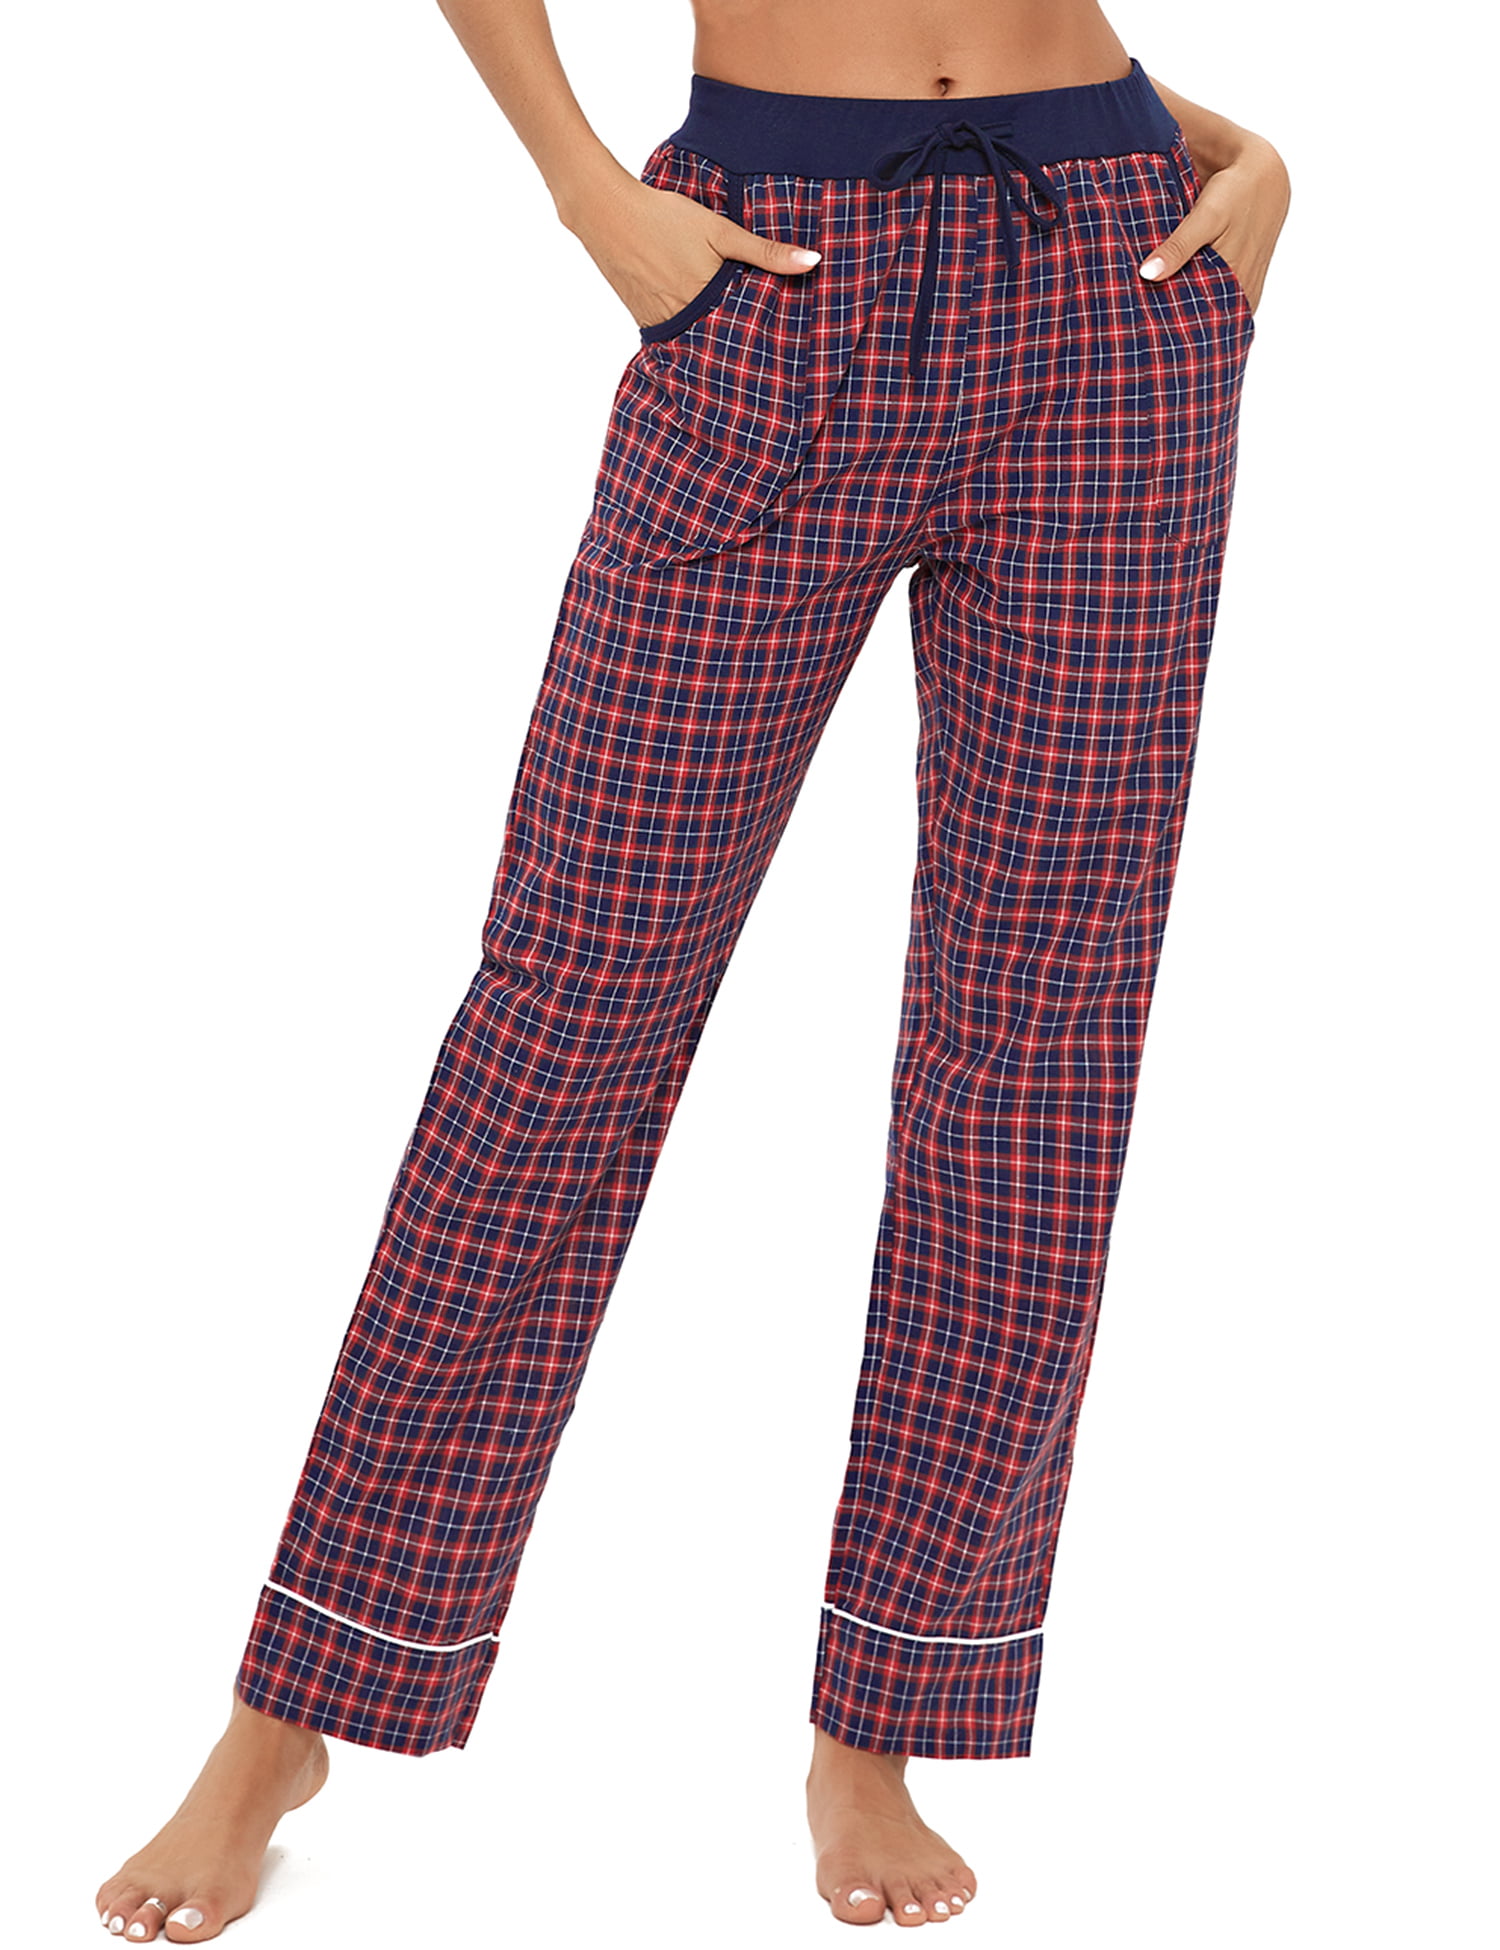 100% Cotton Sleepwear Bottoms Checked Pyjama Bottoms Flannel Lounge Pajamas Pants Aibrou Ladies Plaid Sleepwear 